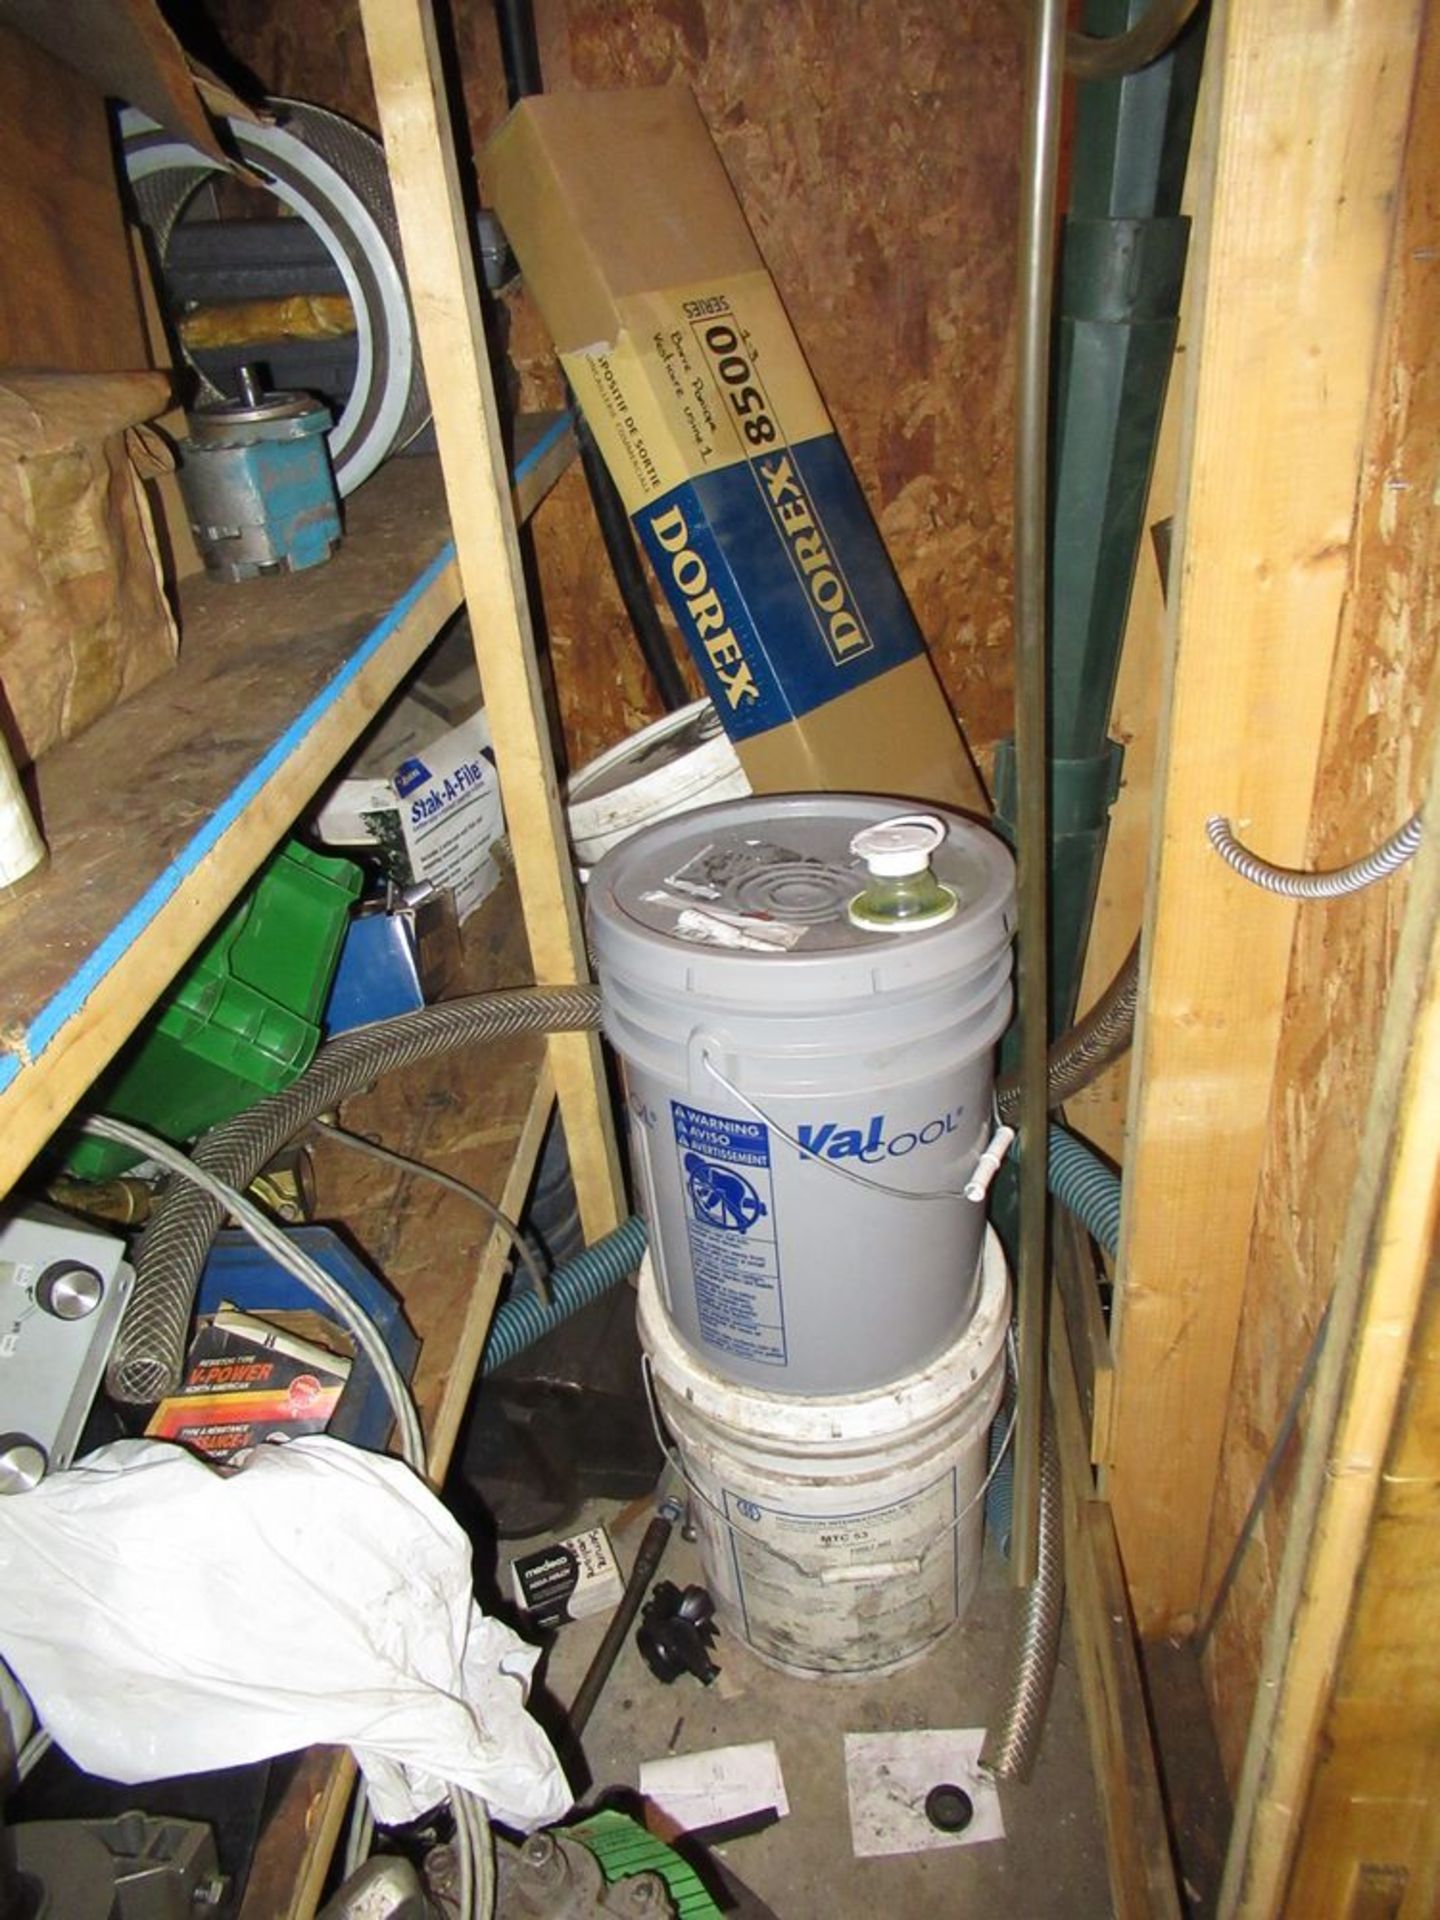 Contents Of Room Under Stairway Pumps, Motors, Filters, Assorted Repair Parts - Image 4 of 4